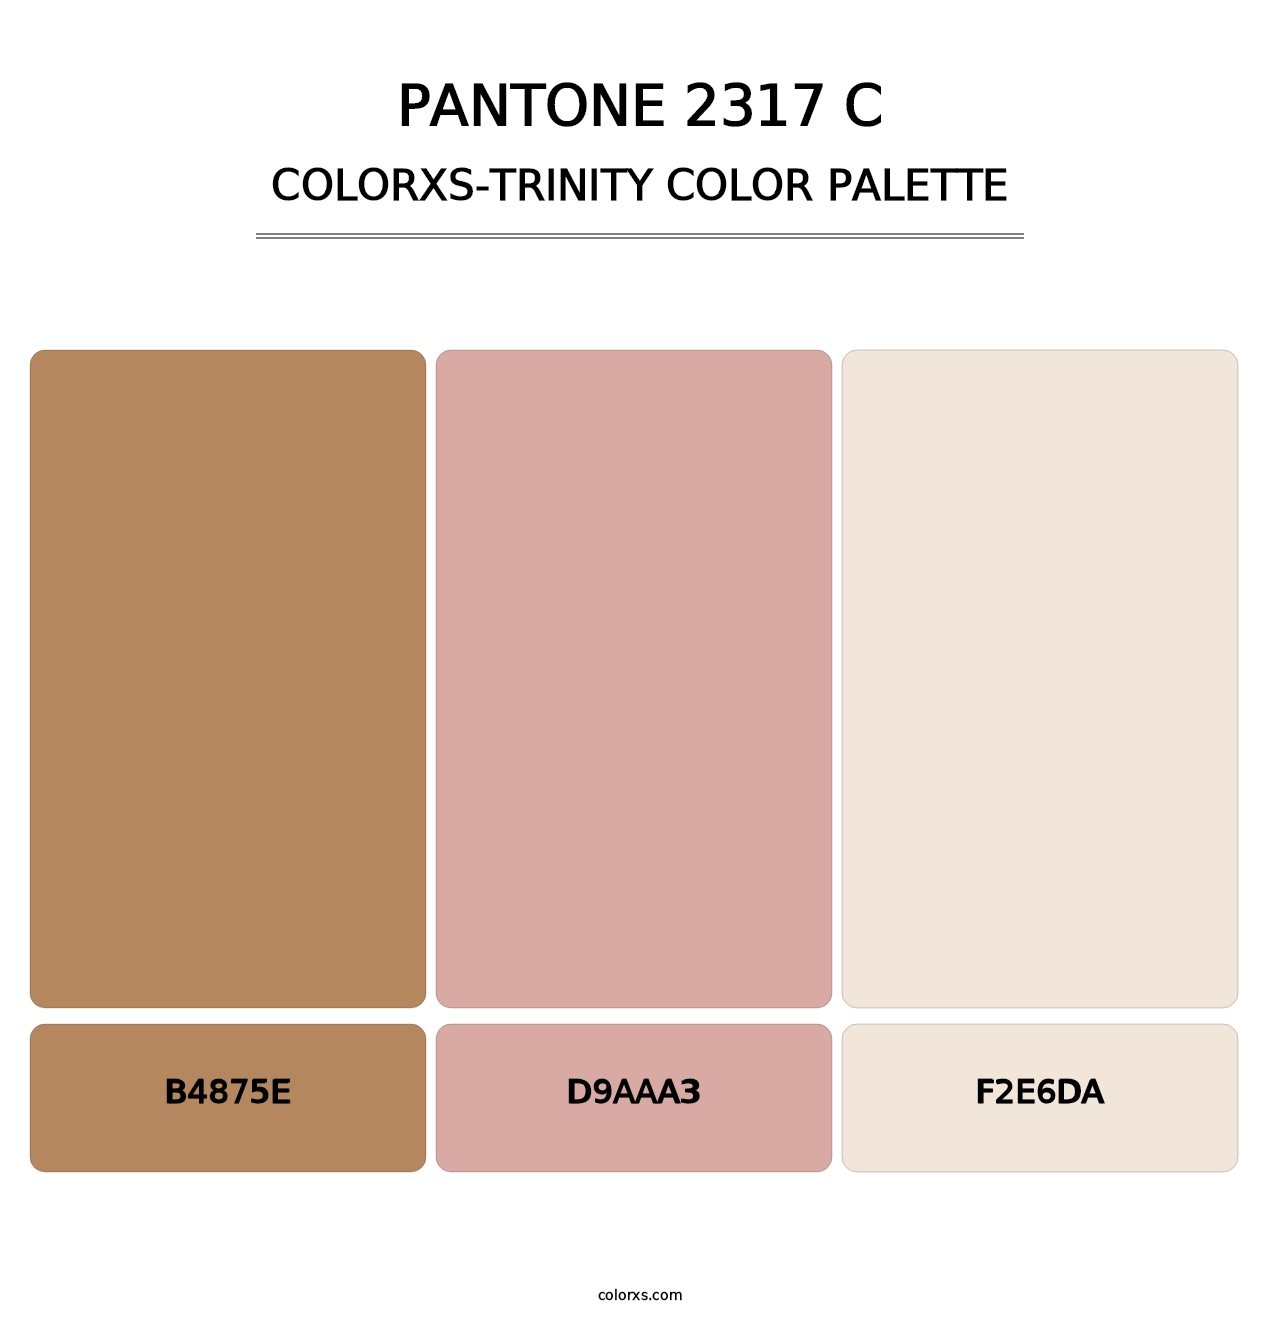 PANTONE 2317 C - Colorxs Trinity Palette